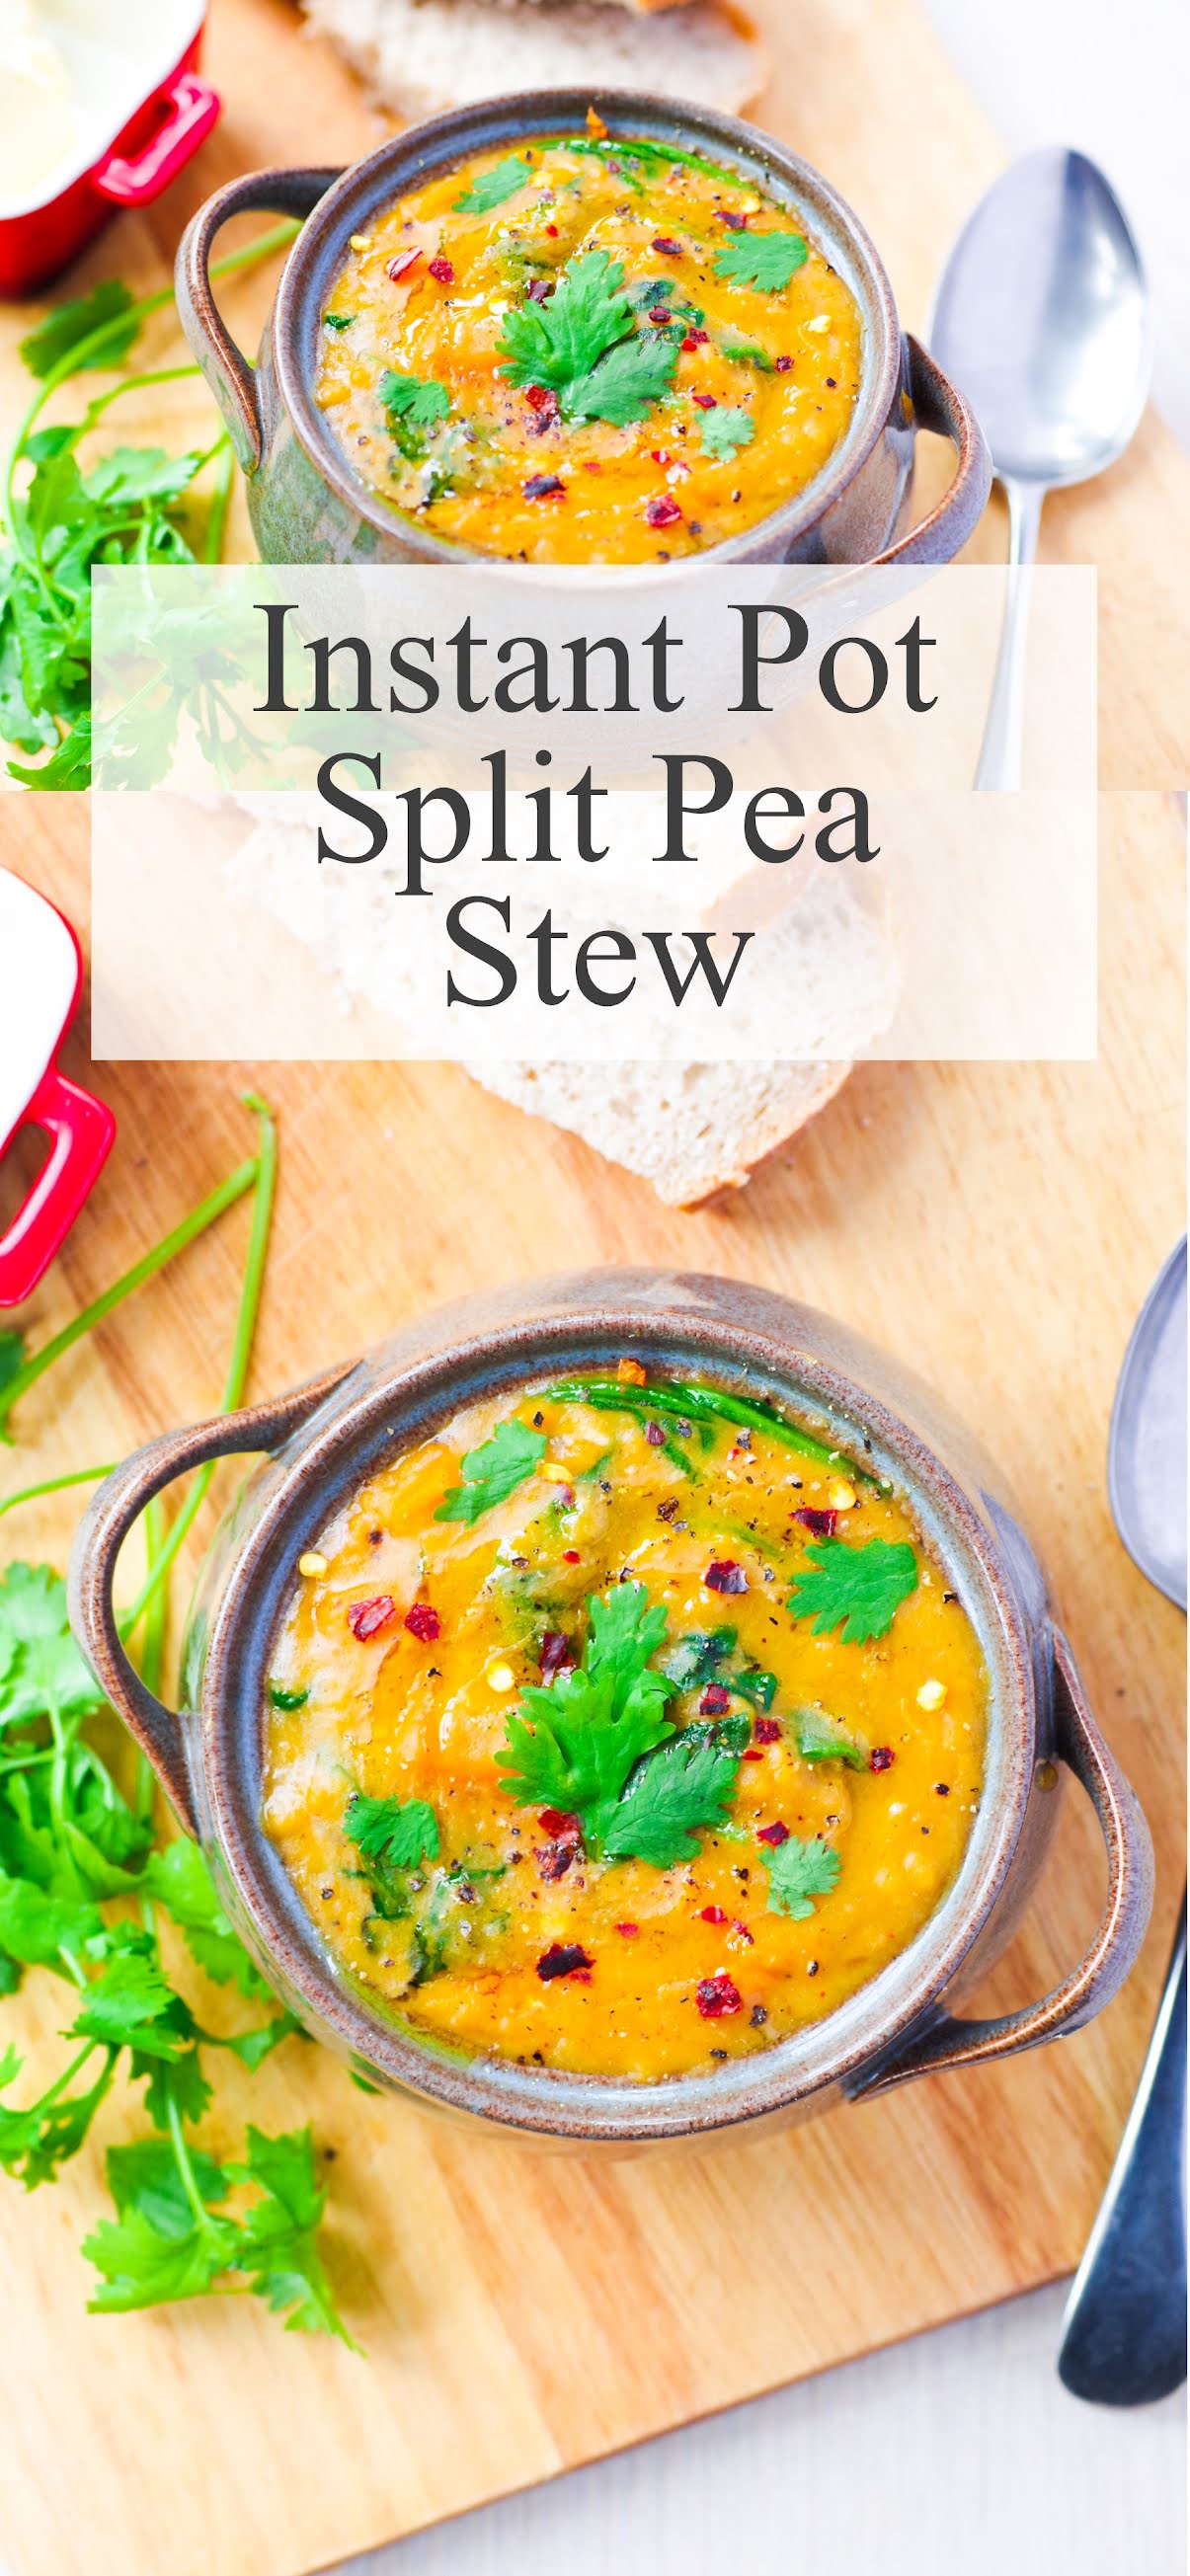 Instant Pot Split Pea Stew |Euphoric Vegan